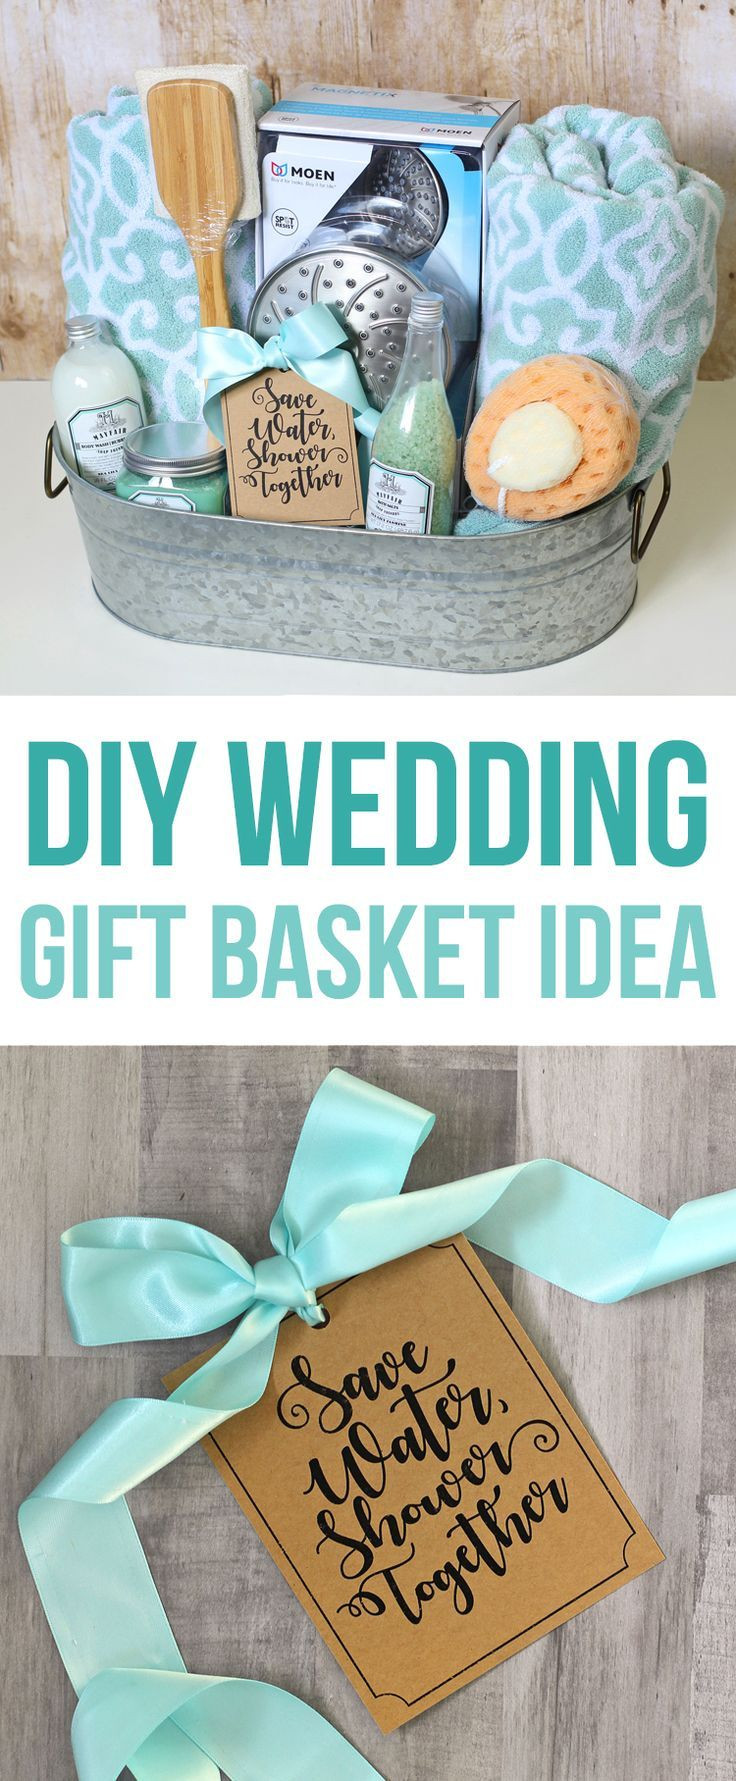 Creative Bridal Shower Gift Basket Ideas
 Shower Themed DIY Wedding Gift Basket Idea